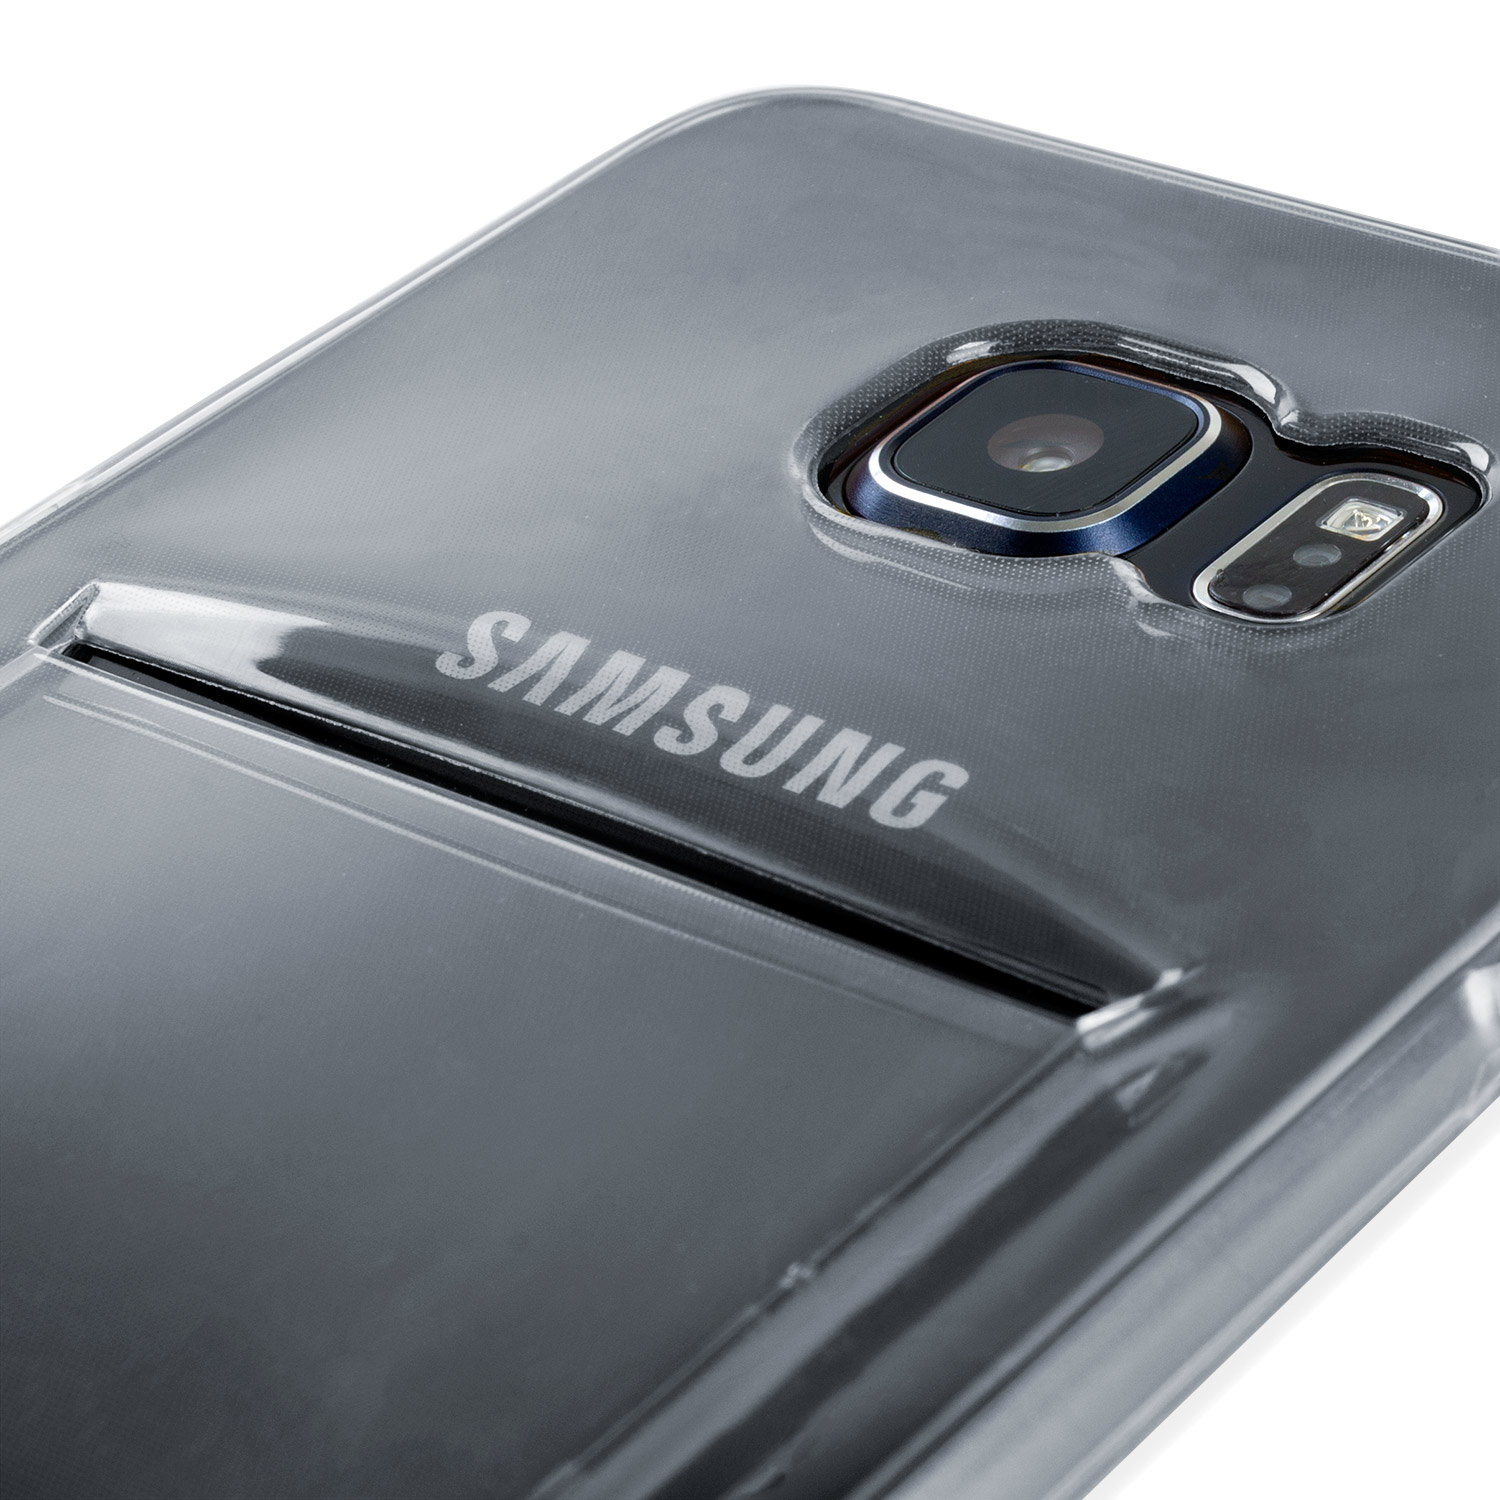 FlexiShield Slot Samsung Galaxy S6 Edge Plus Gel Case - Grey Tint